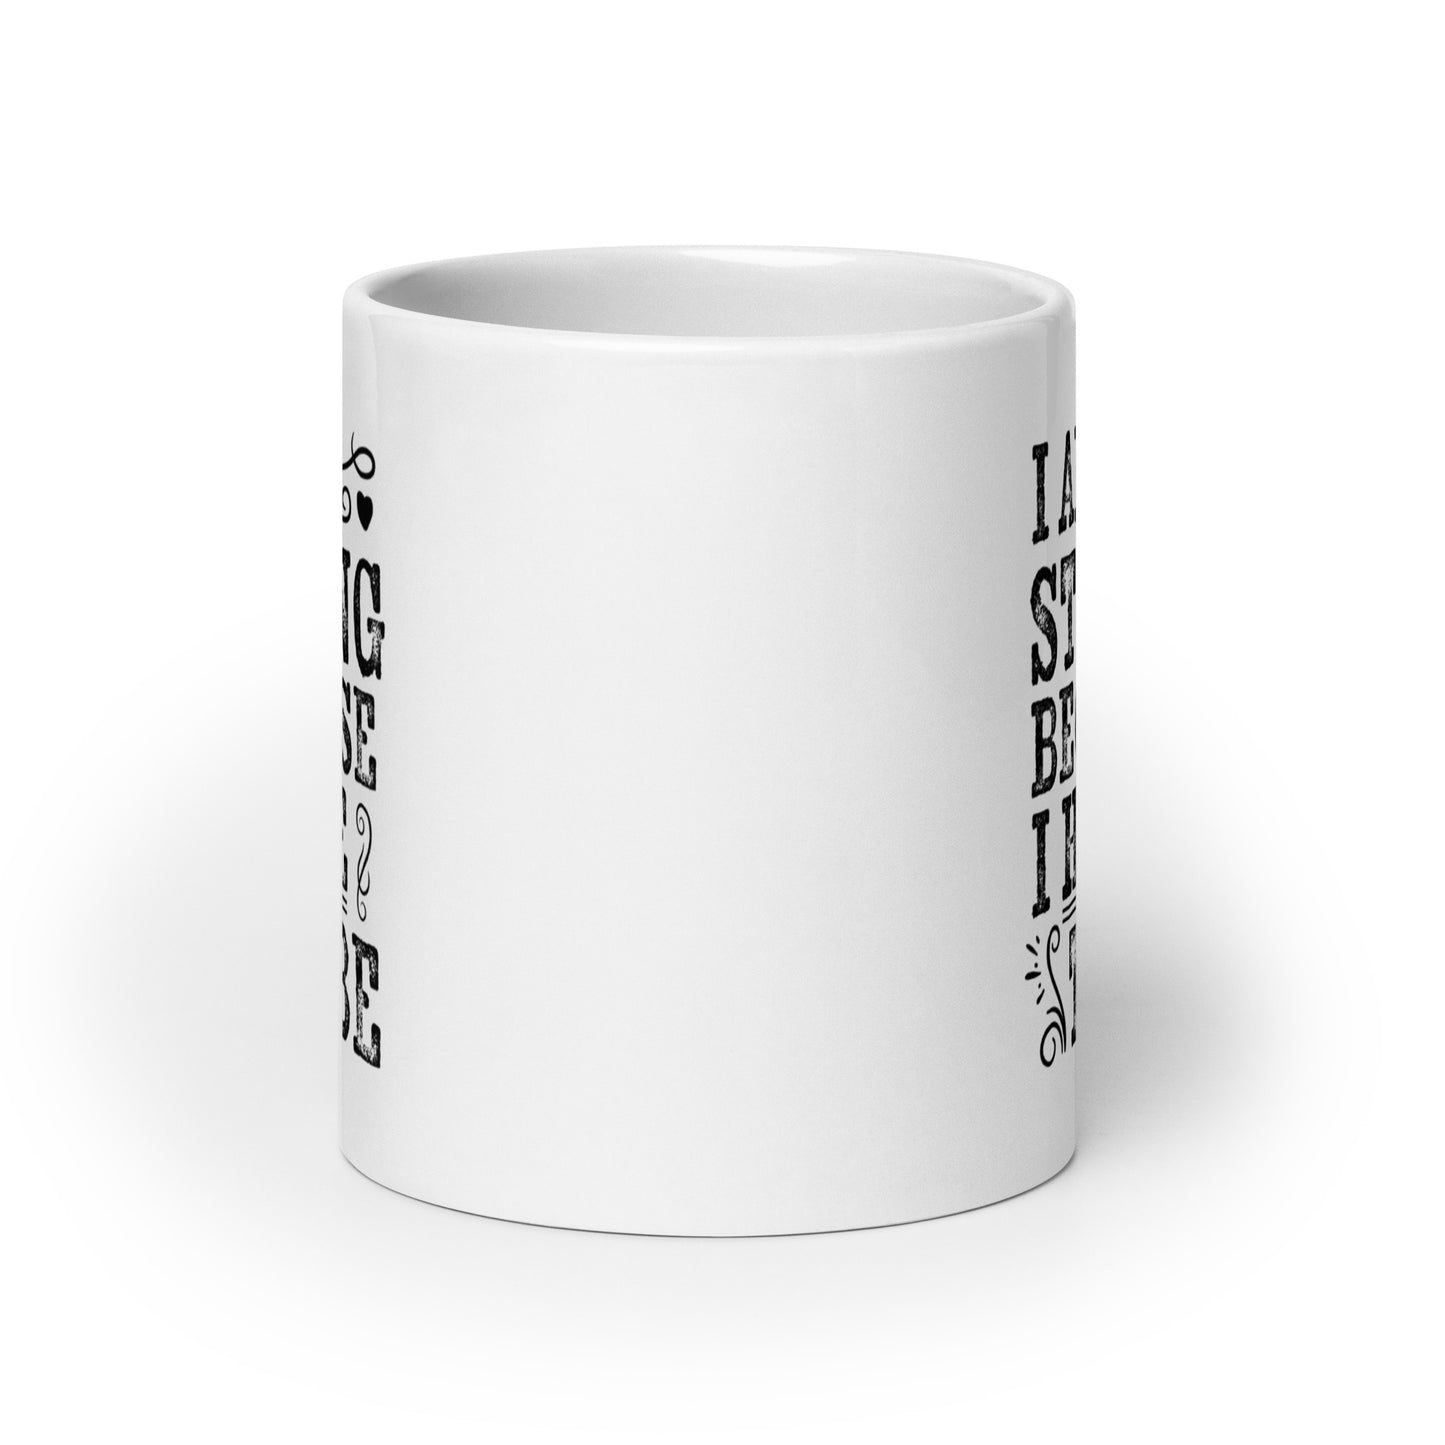 Emblem Mother's Day Series - Strong - Ceramic Mug